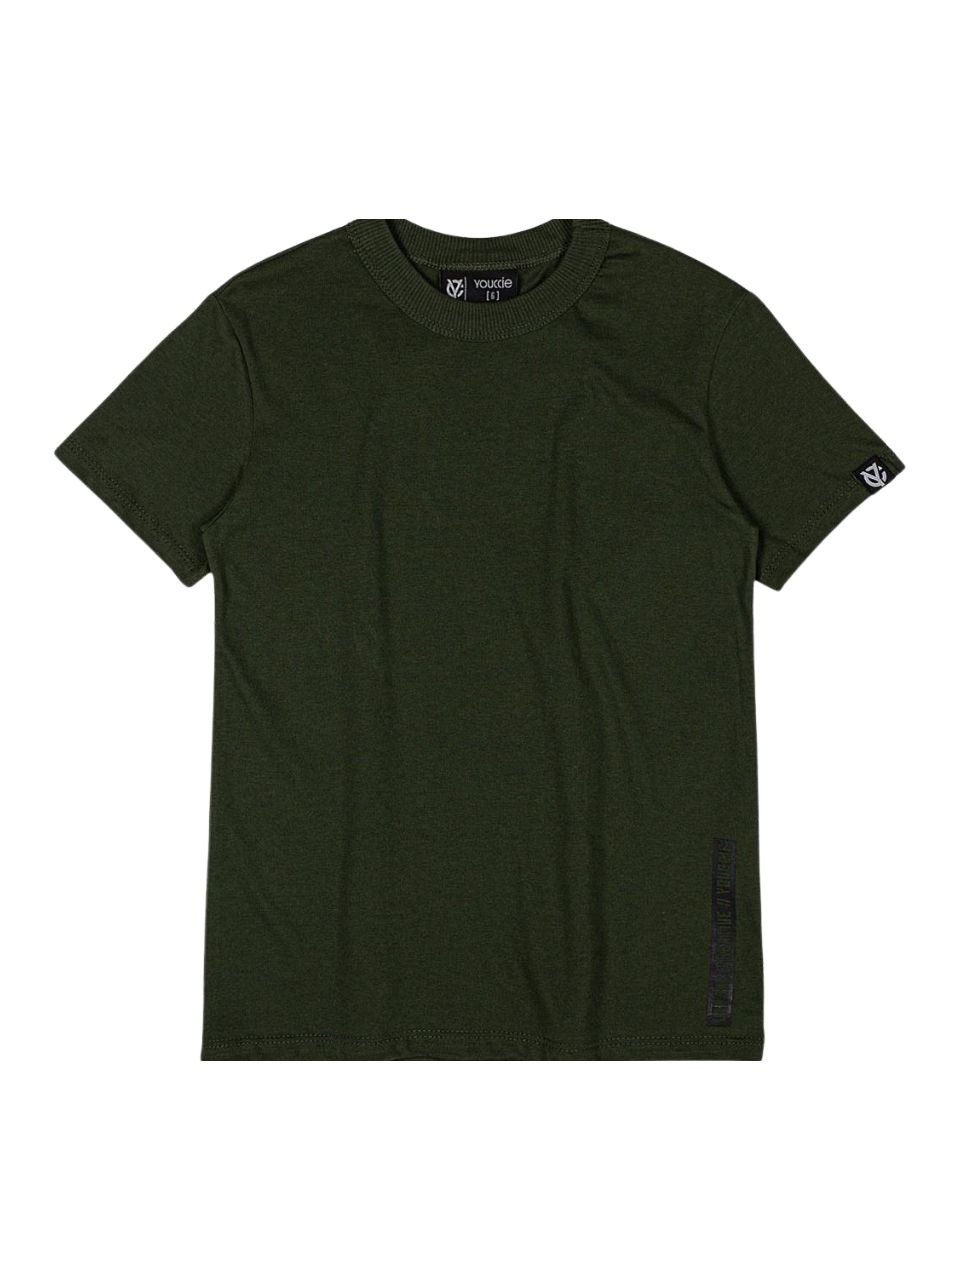 Camiseta Youccie Básica Verde